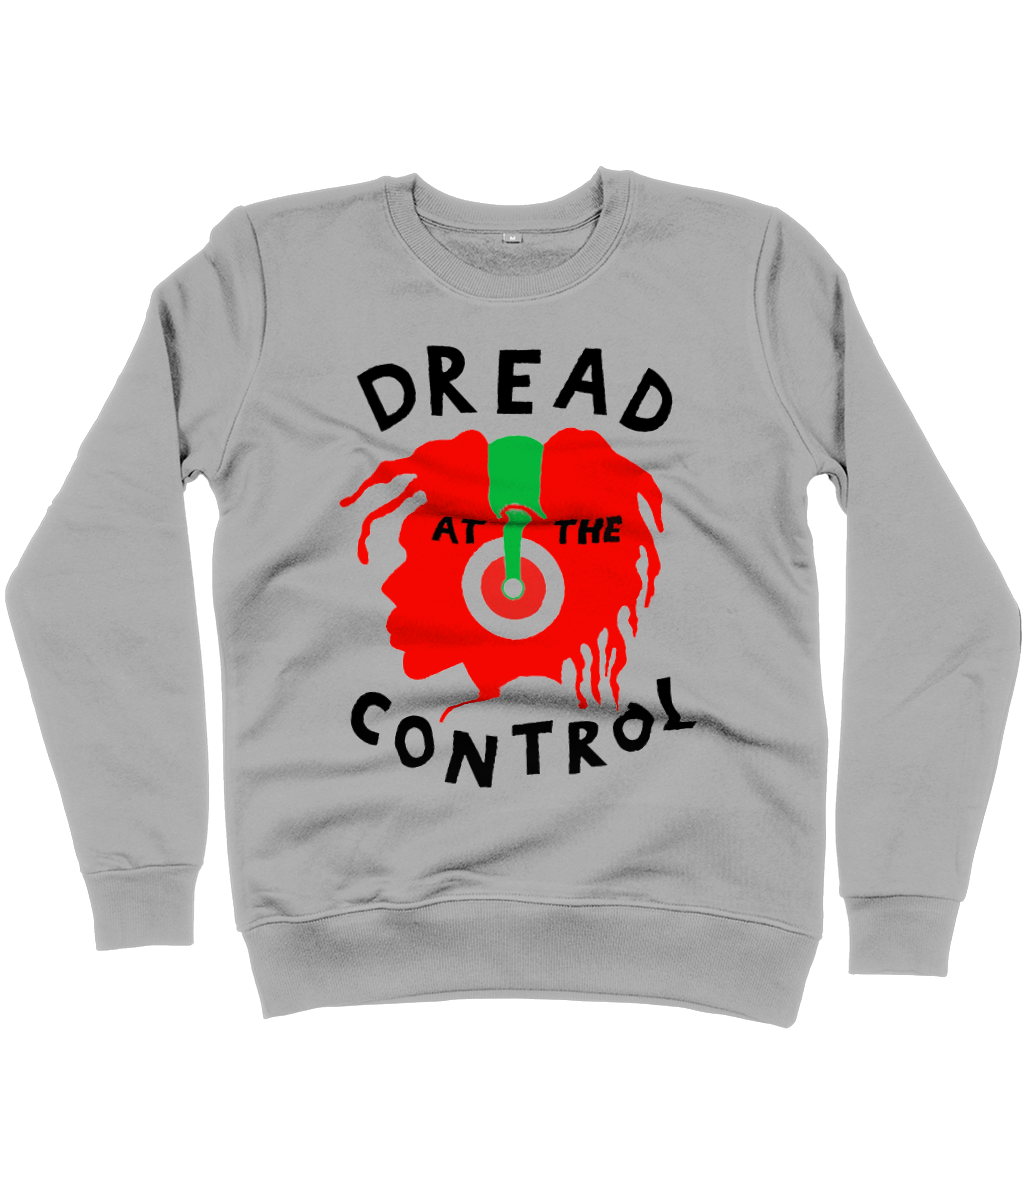 DREAD AT THE CONTROL - MIKEY DREAD - 1978 - Sweatshirt